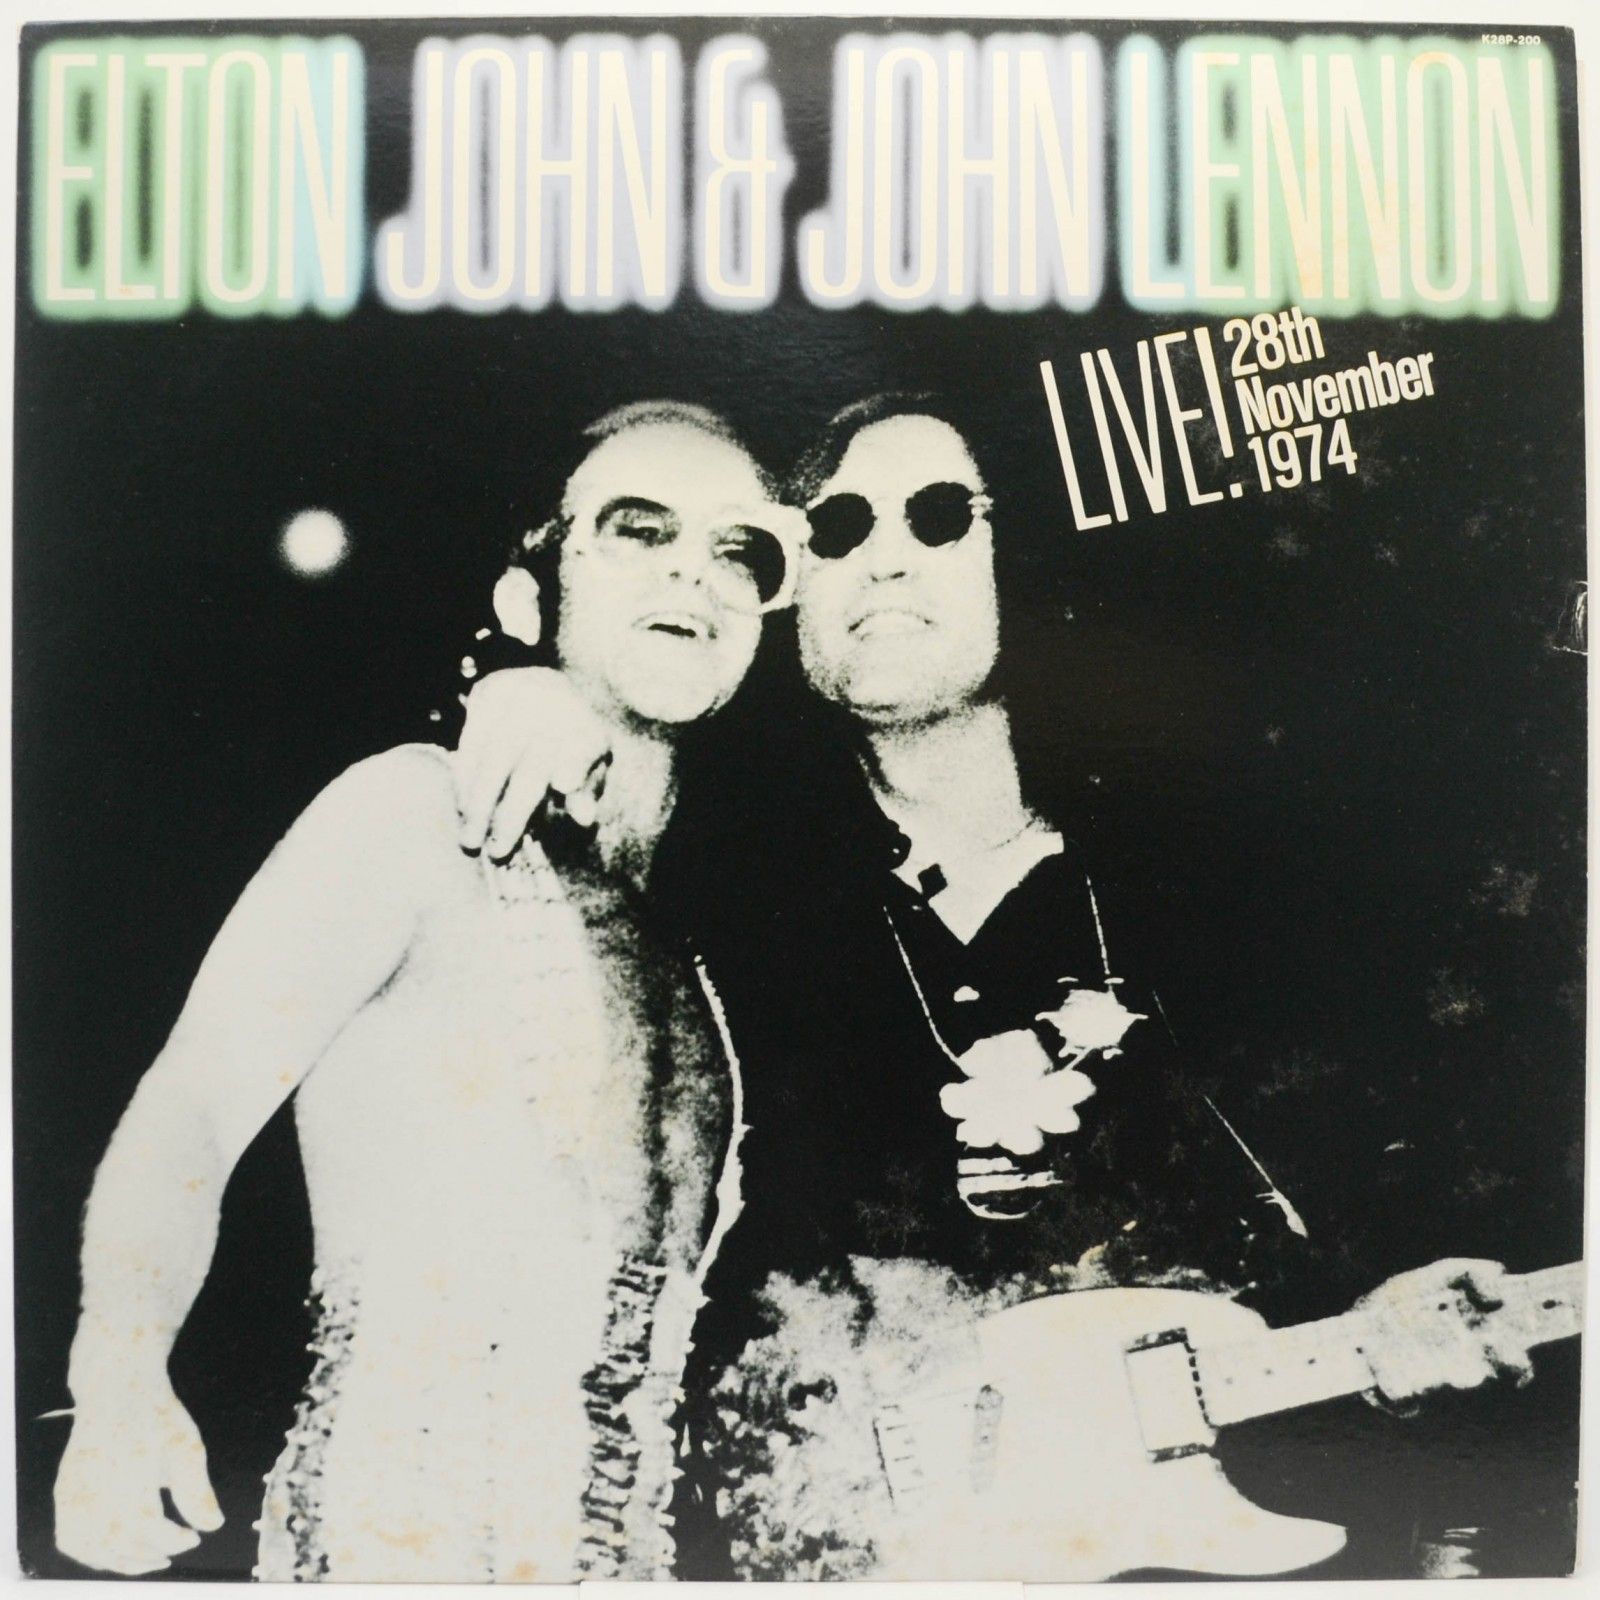 Elton John & John Lennon — Live! 28 November 1974, 1981